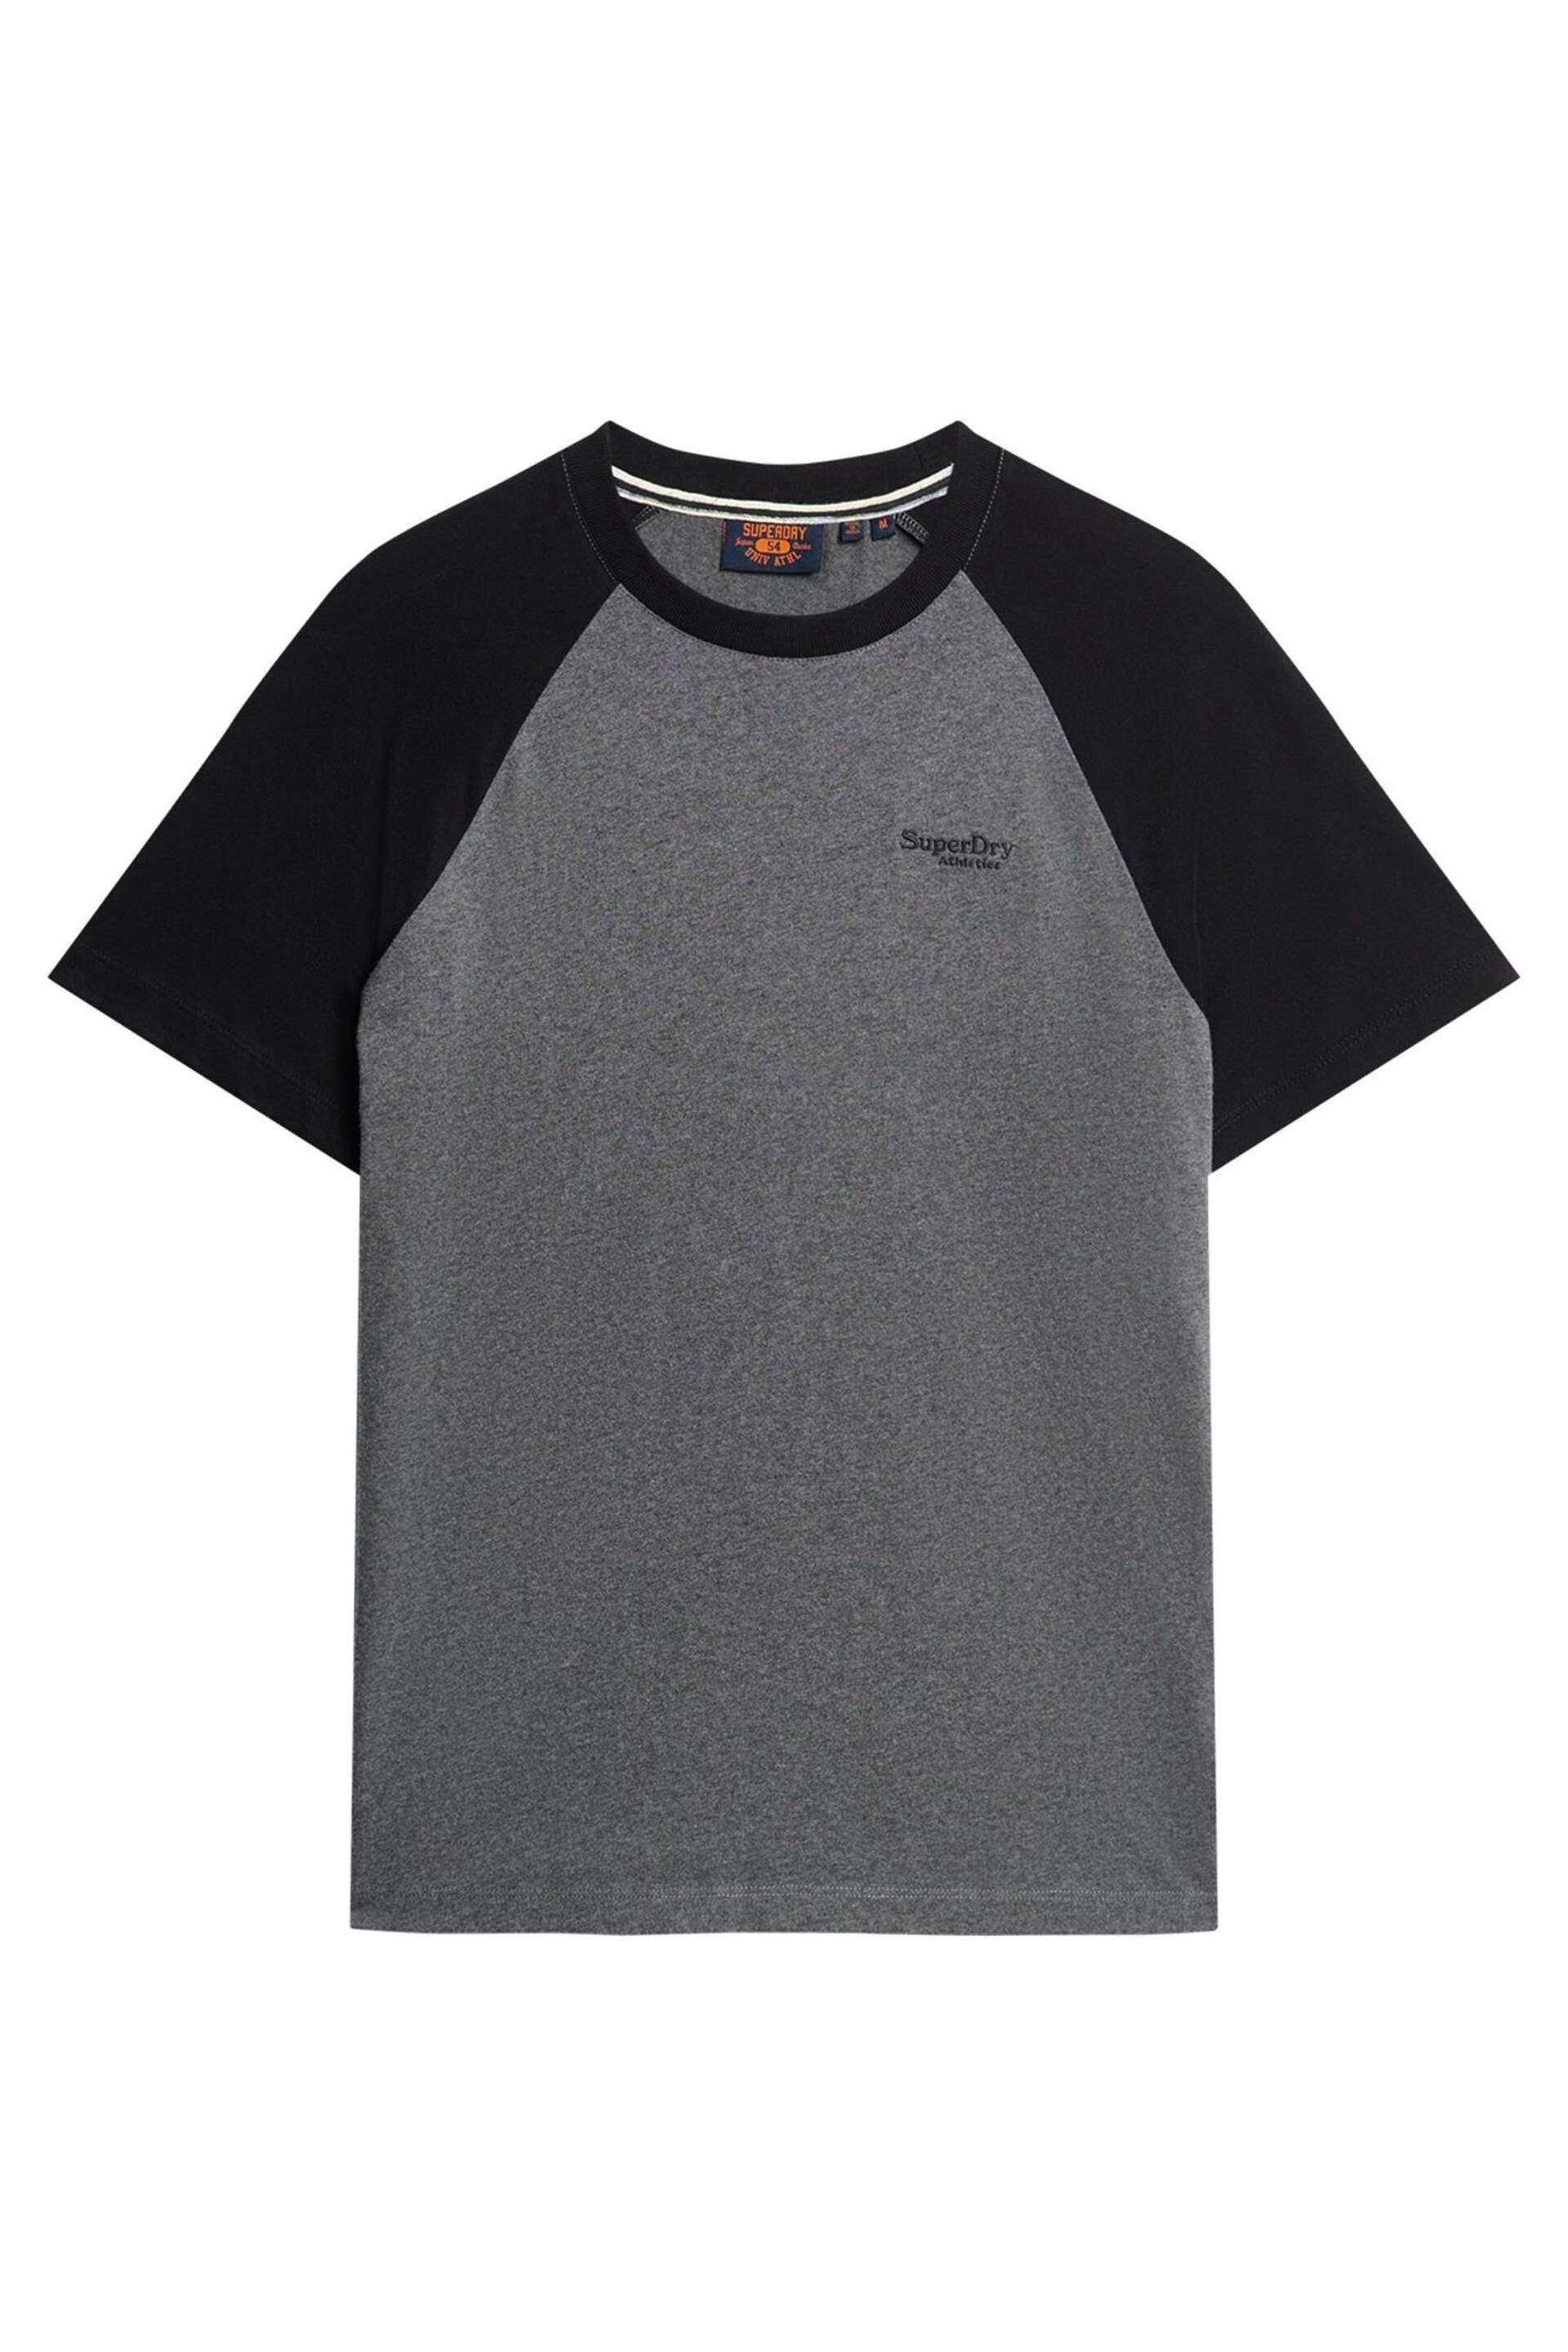 Superdry Grey Essential Logo Baseball T-Shirt - Image 4 of 6